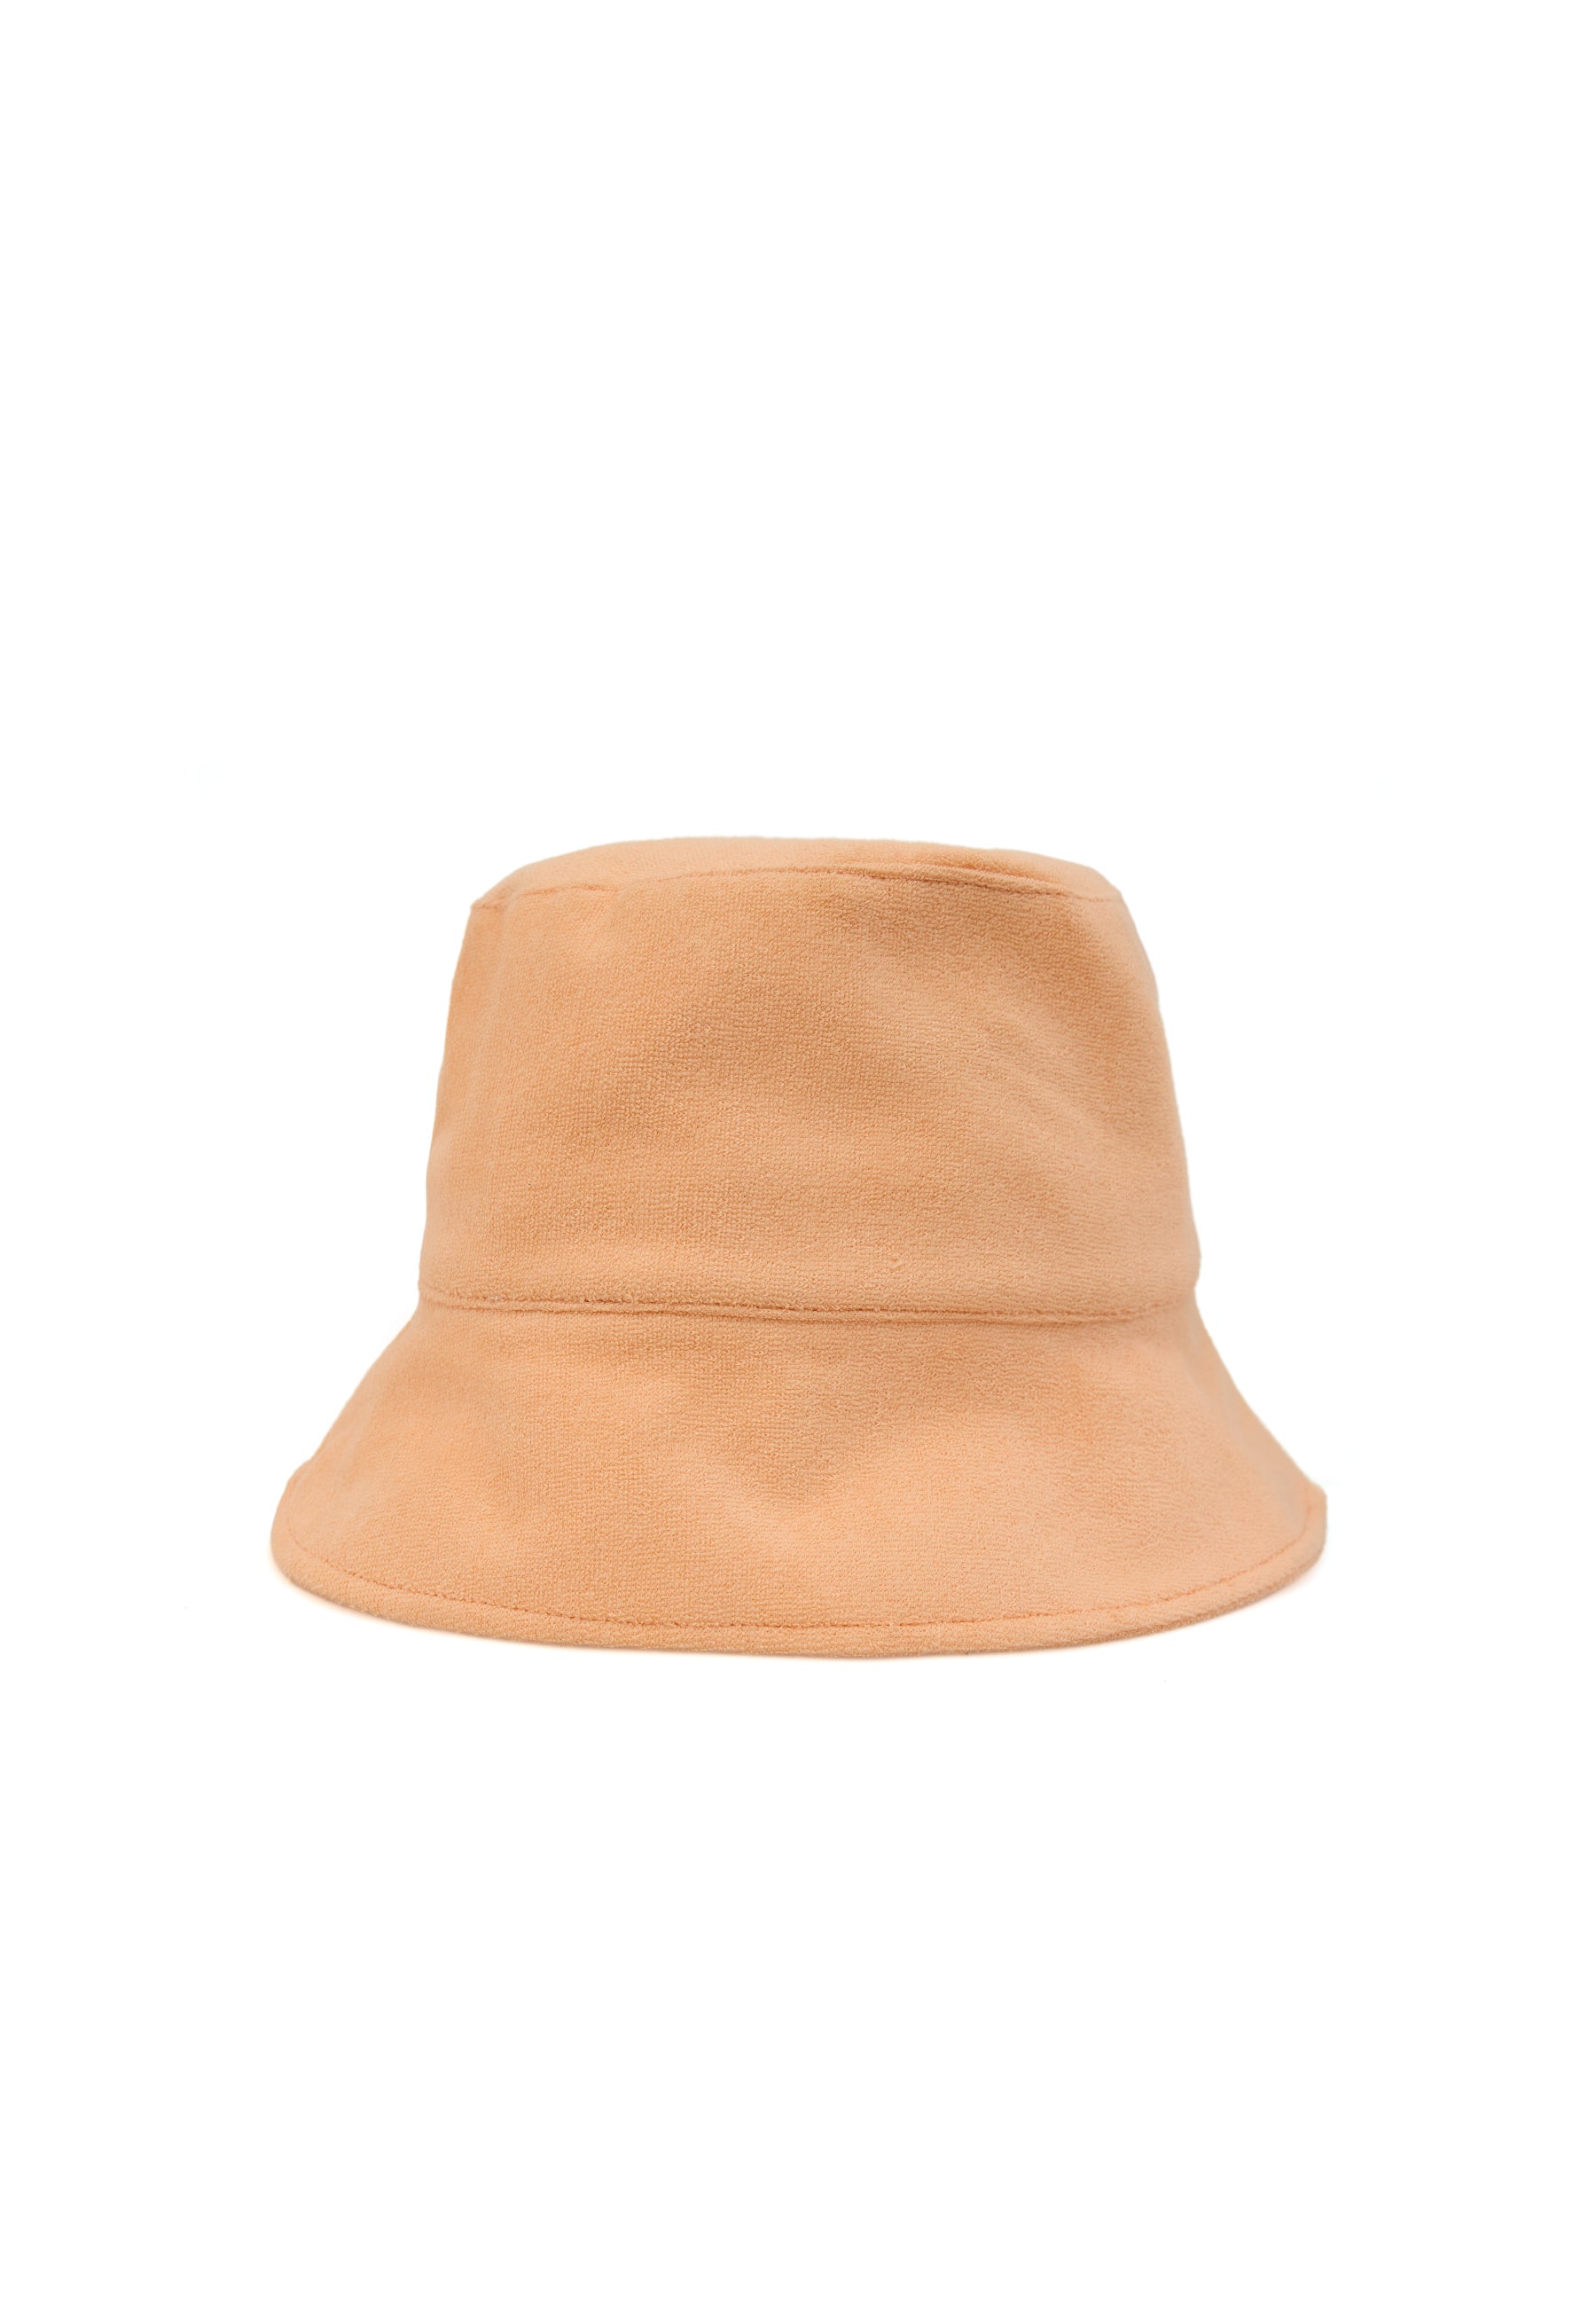 WMTOWEL BUCKET HAT in Apricot Wash